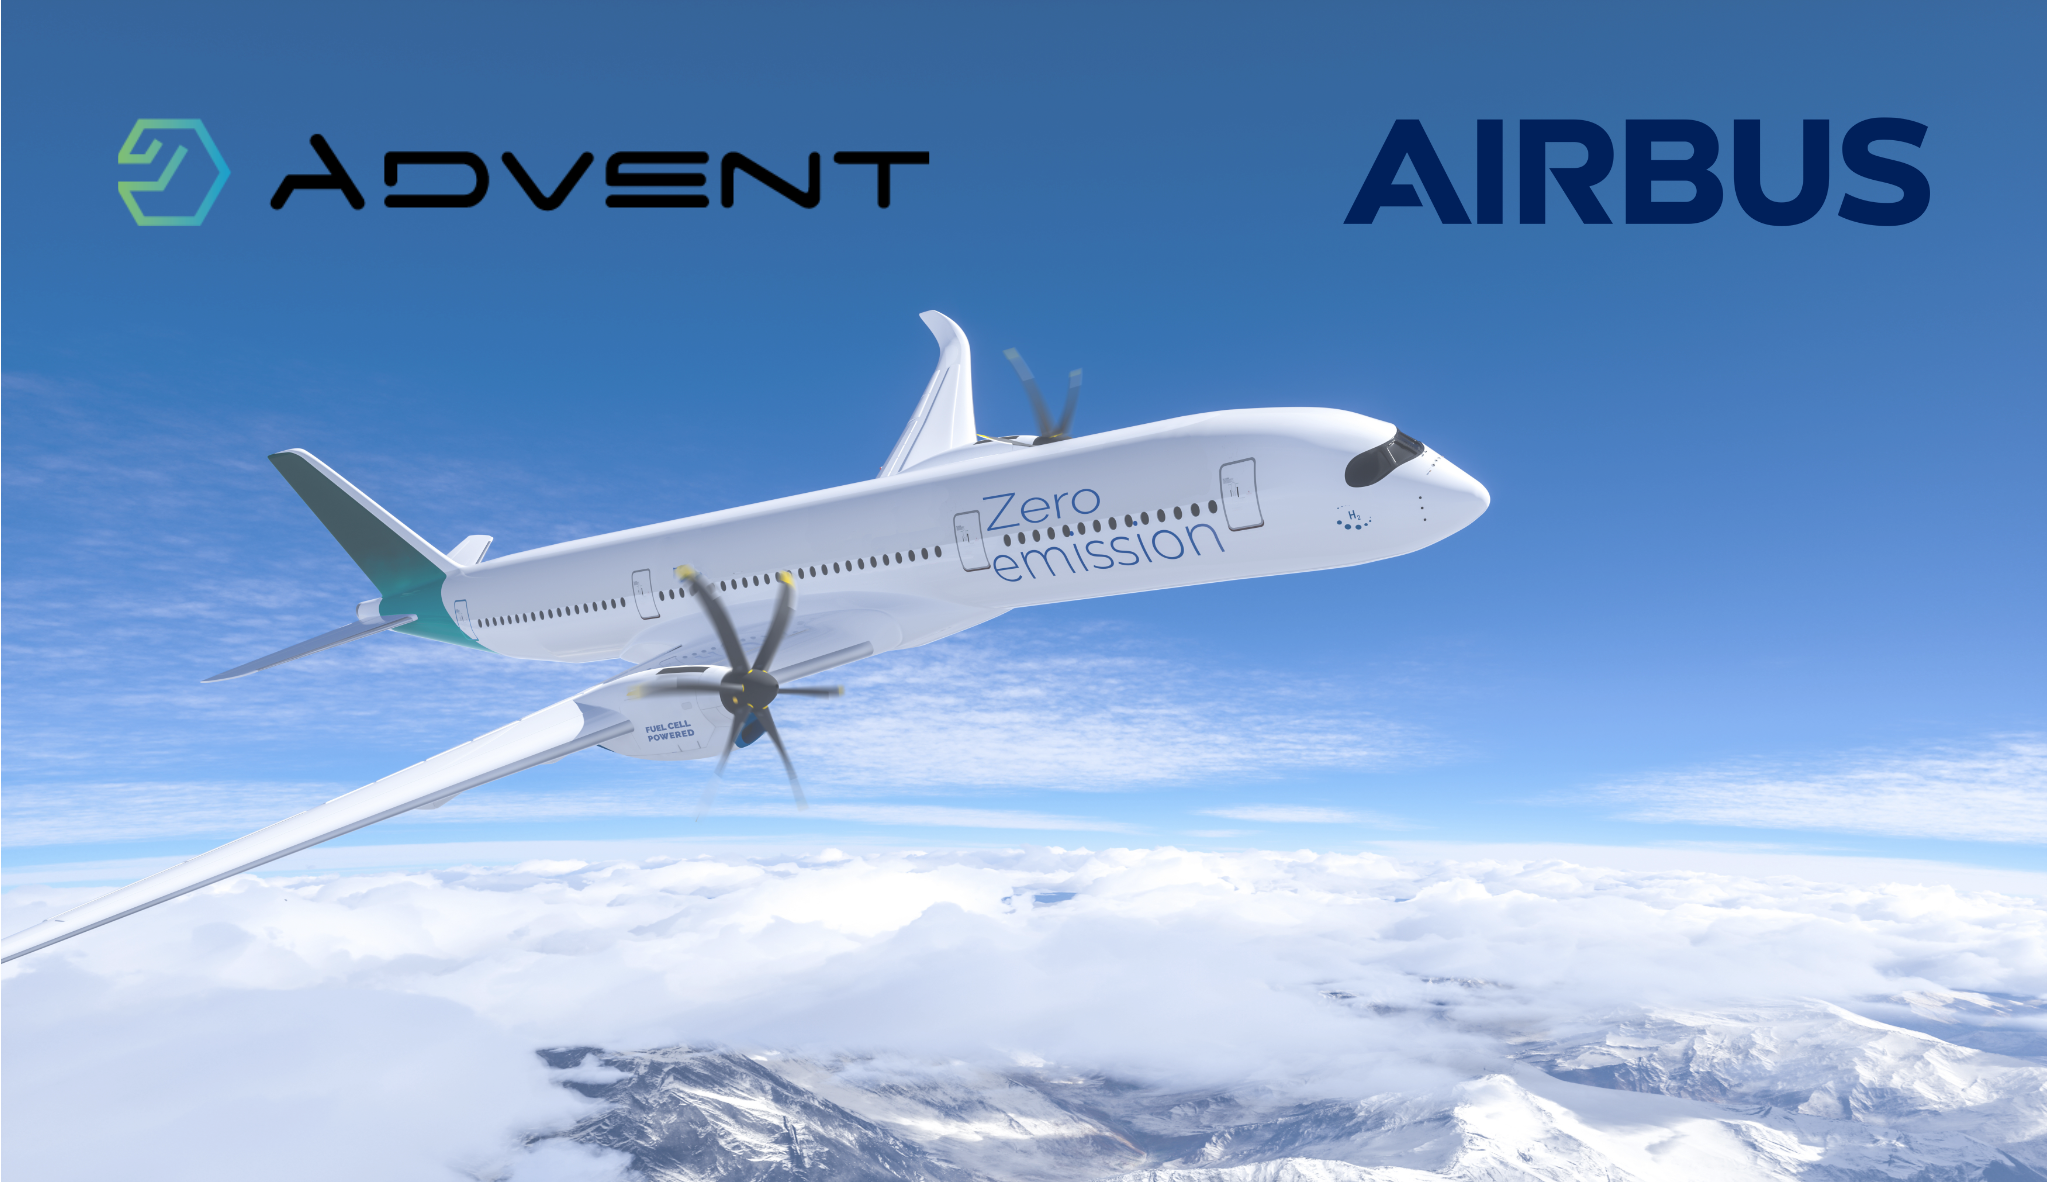 Advent: Tο 2026 έτος-κλειδί για το κοινό πρότζεκτ με την Airbus, ύψους 13 εκατ. ευρώ